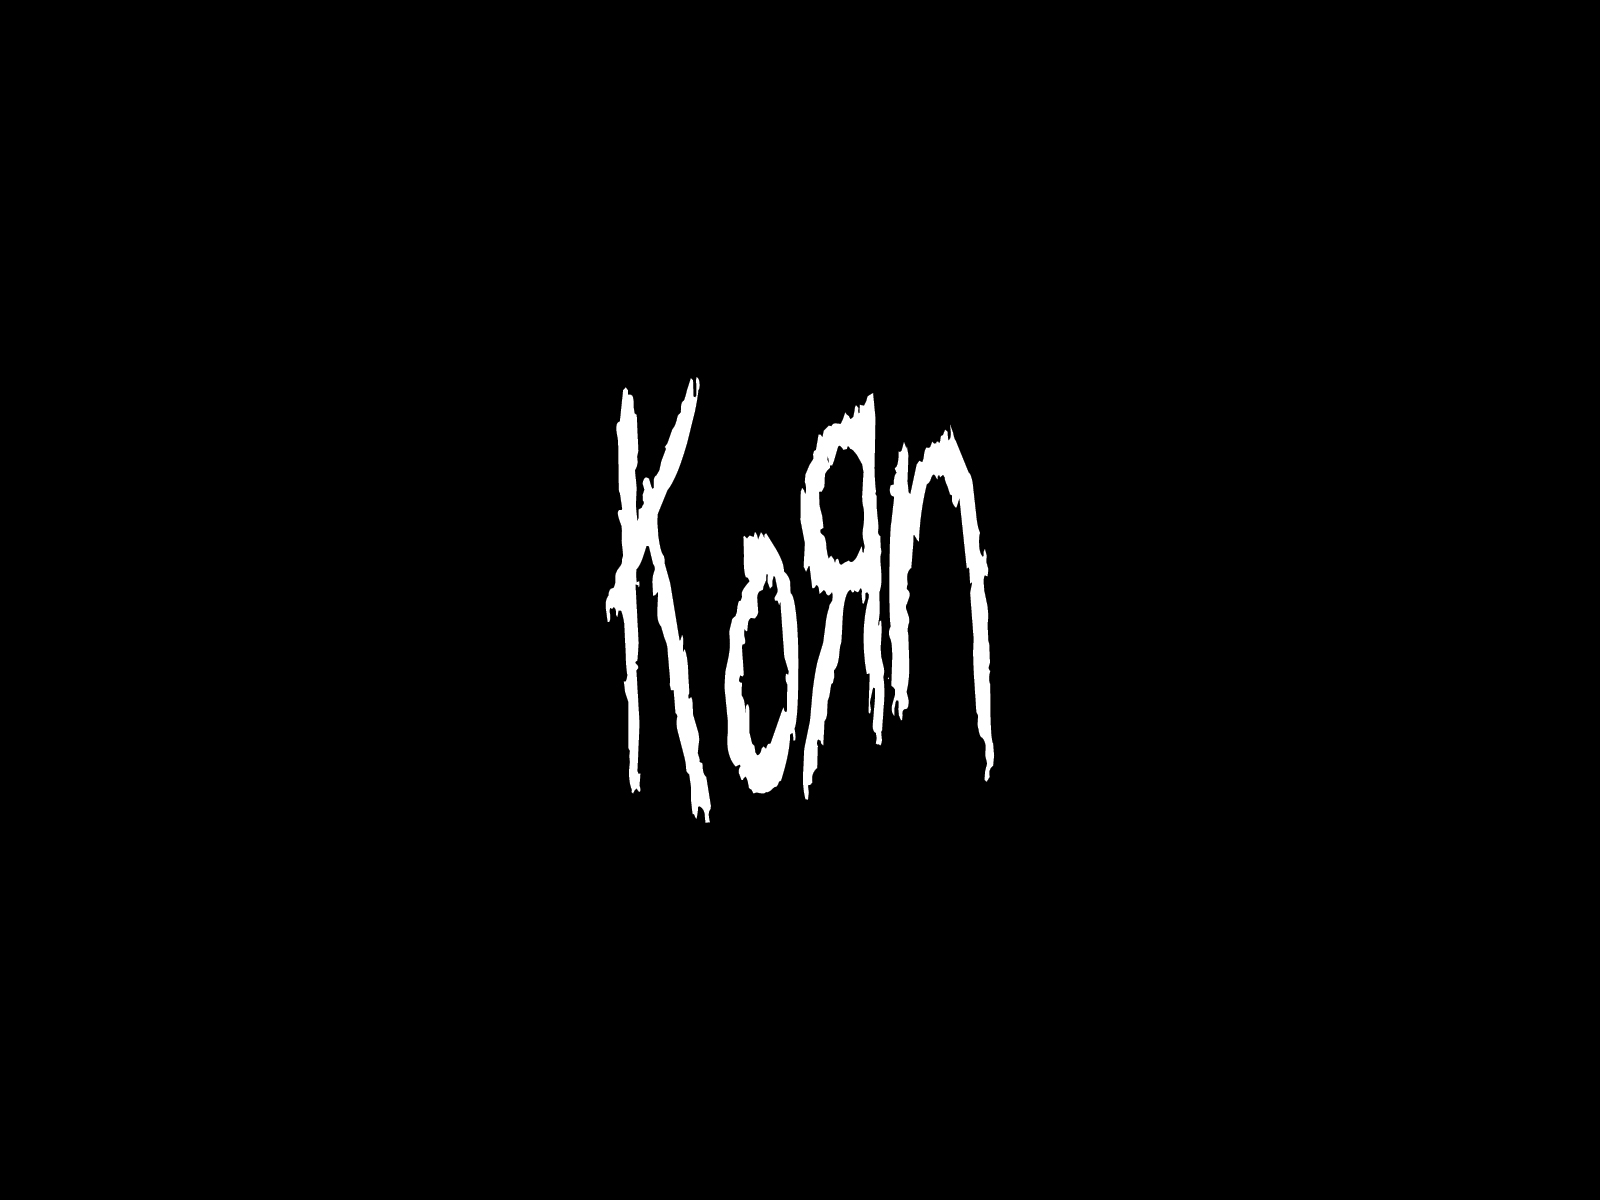 Korn logo and wallpaper Band logos - Rock band logos, metal